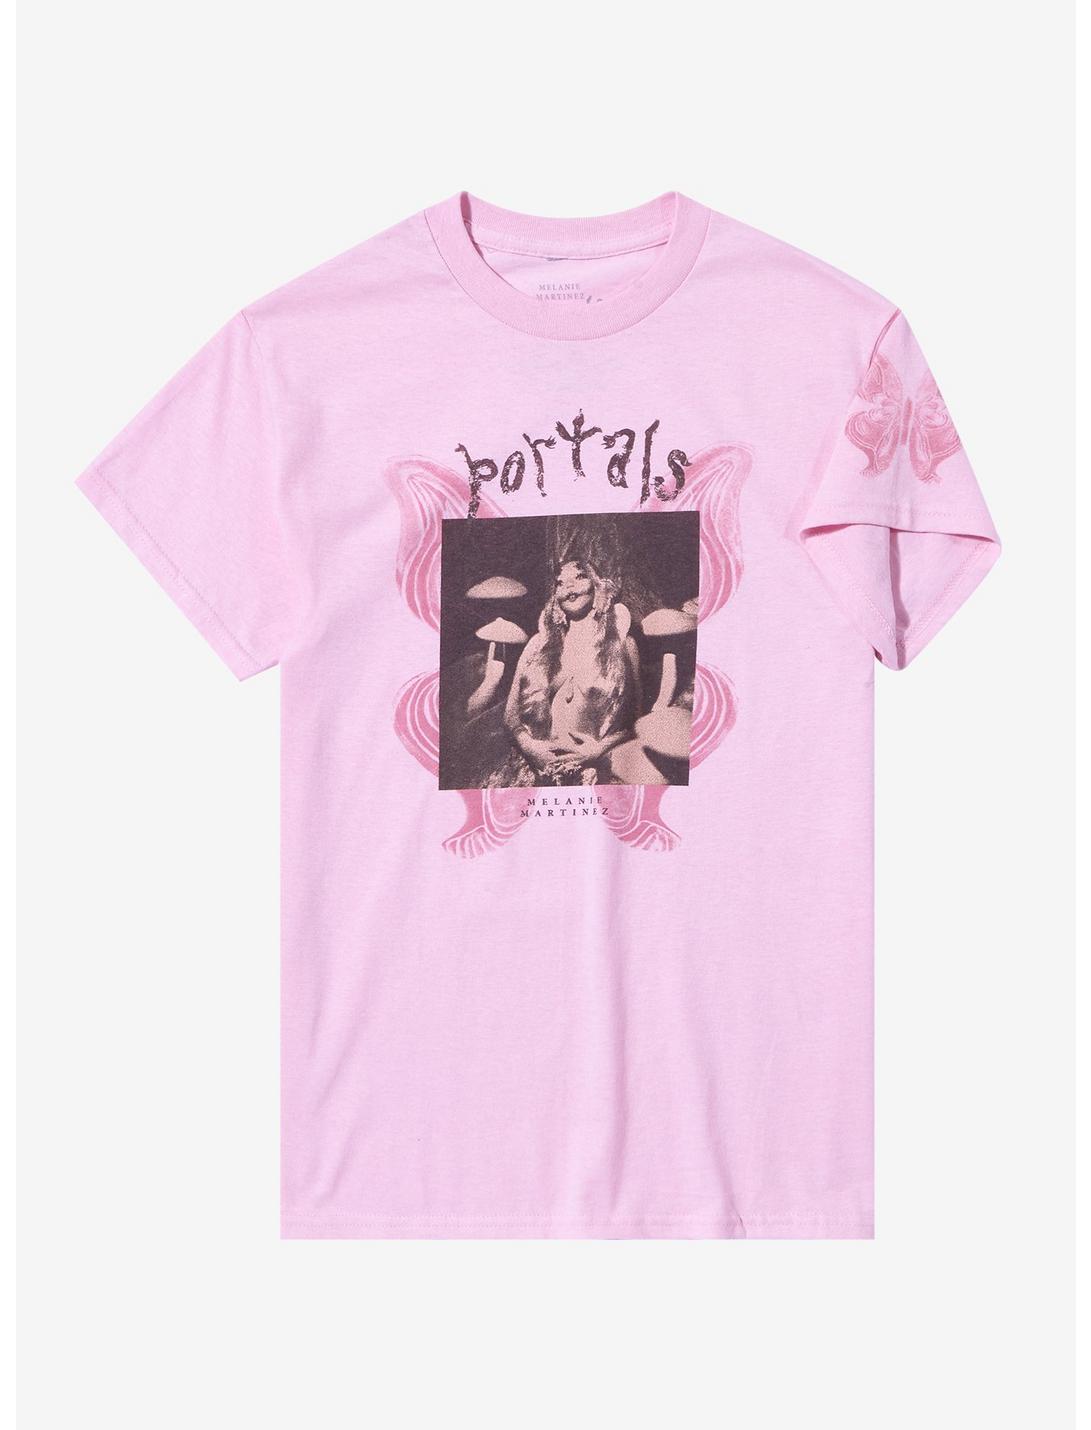 Melanie Martinez Portals Creature Portrait Pastel Pink T-Shirt, PINK, hi-res